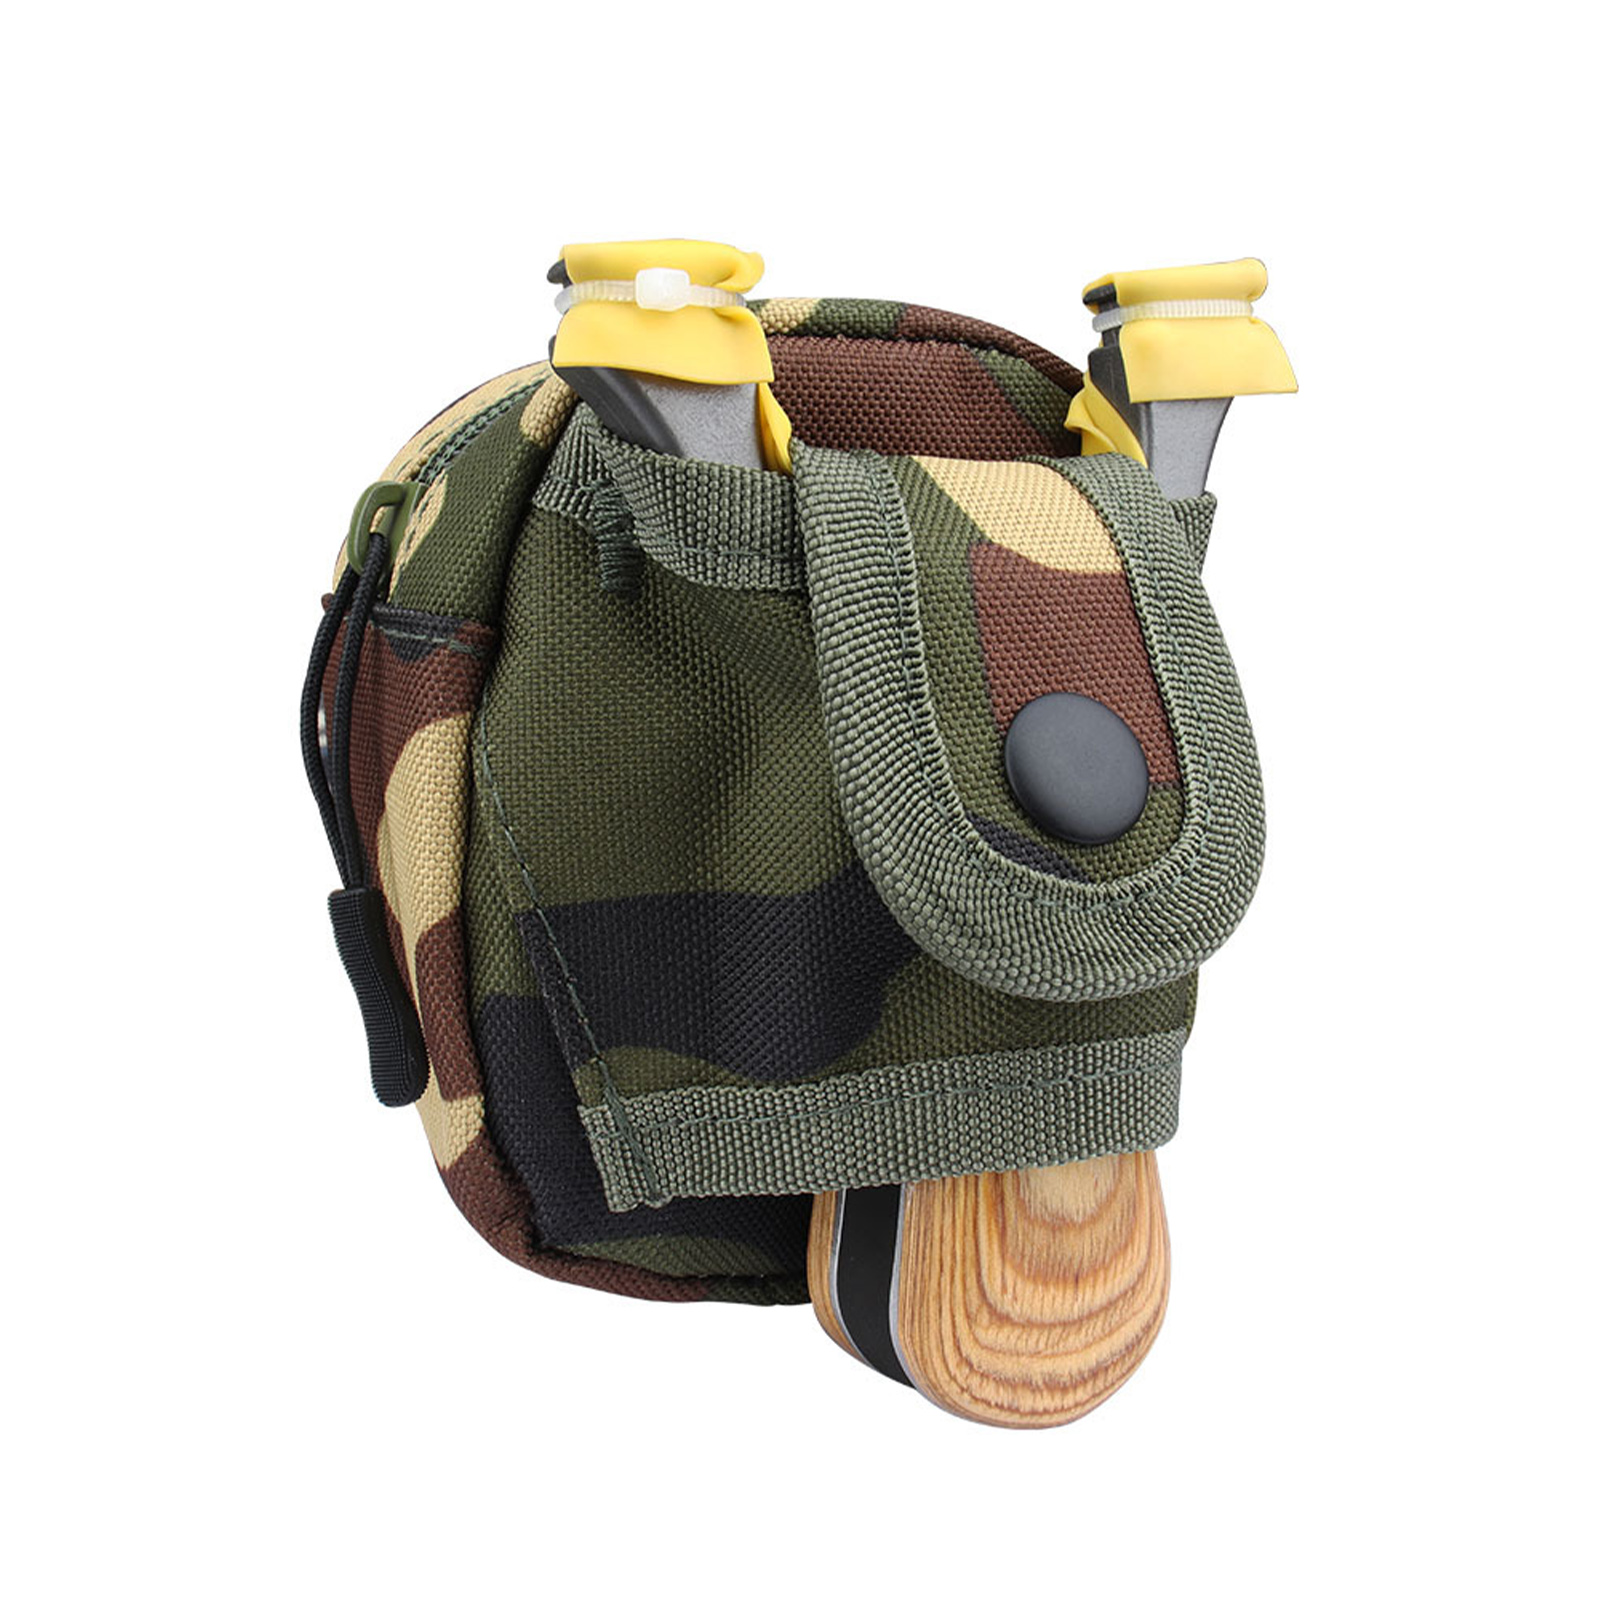 Slingshot Pouch Portable Steel Balls Storage Bag Utility Gadget Gear Pack Buckle Zipper Waist Bag For Camping